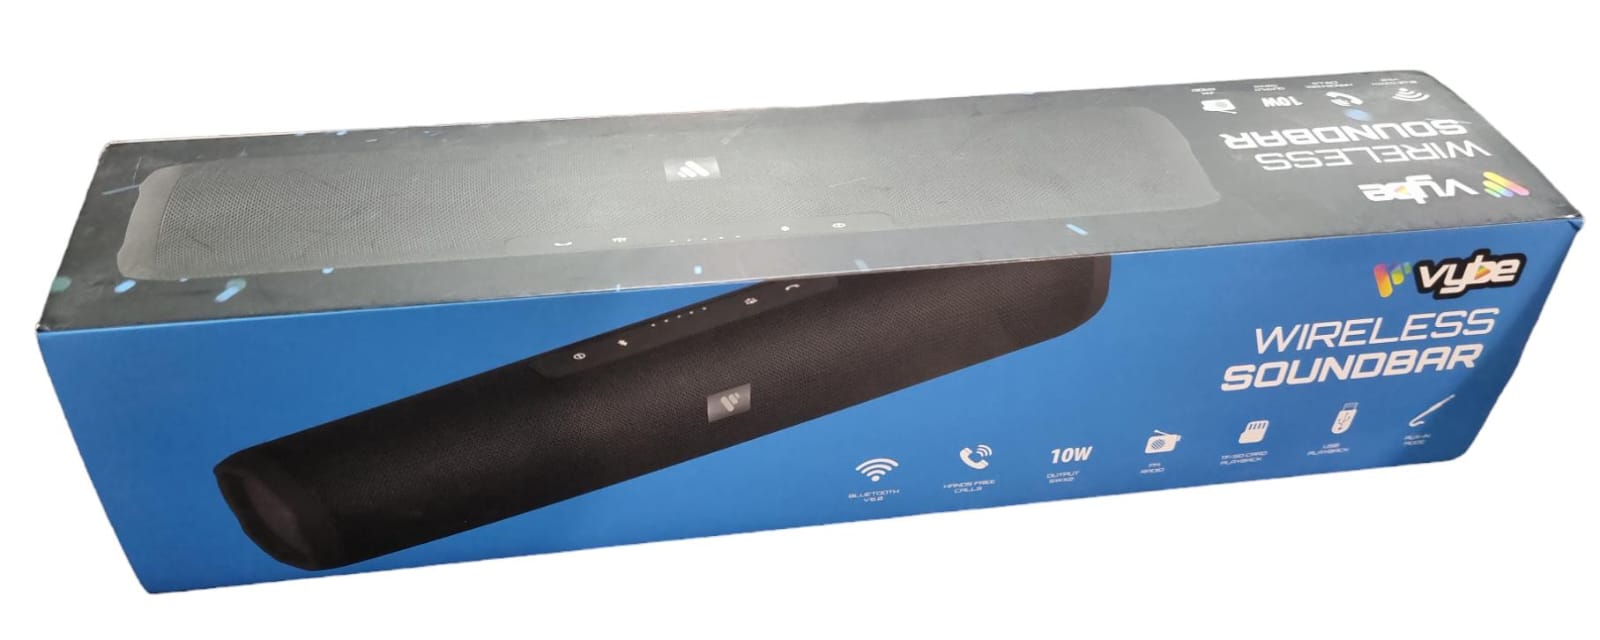 Vybe Wireless Soundbar -  VYB01 - Boxed 